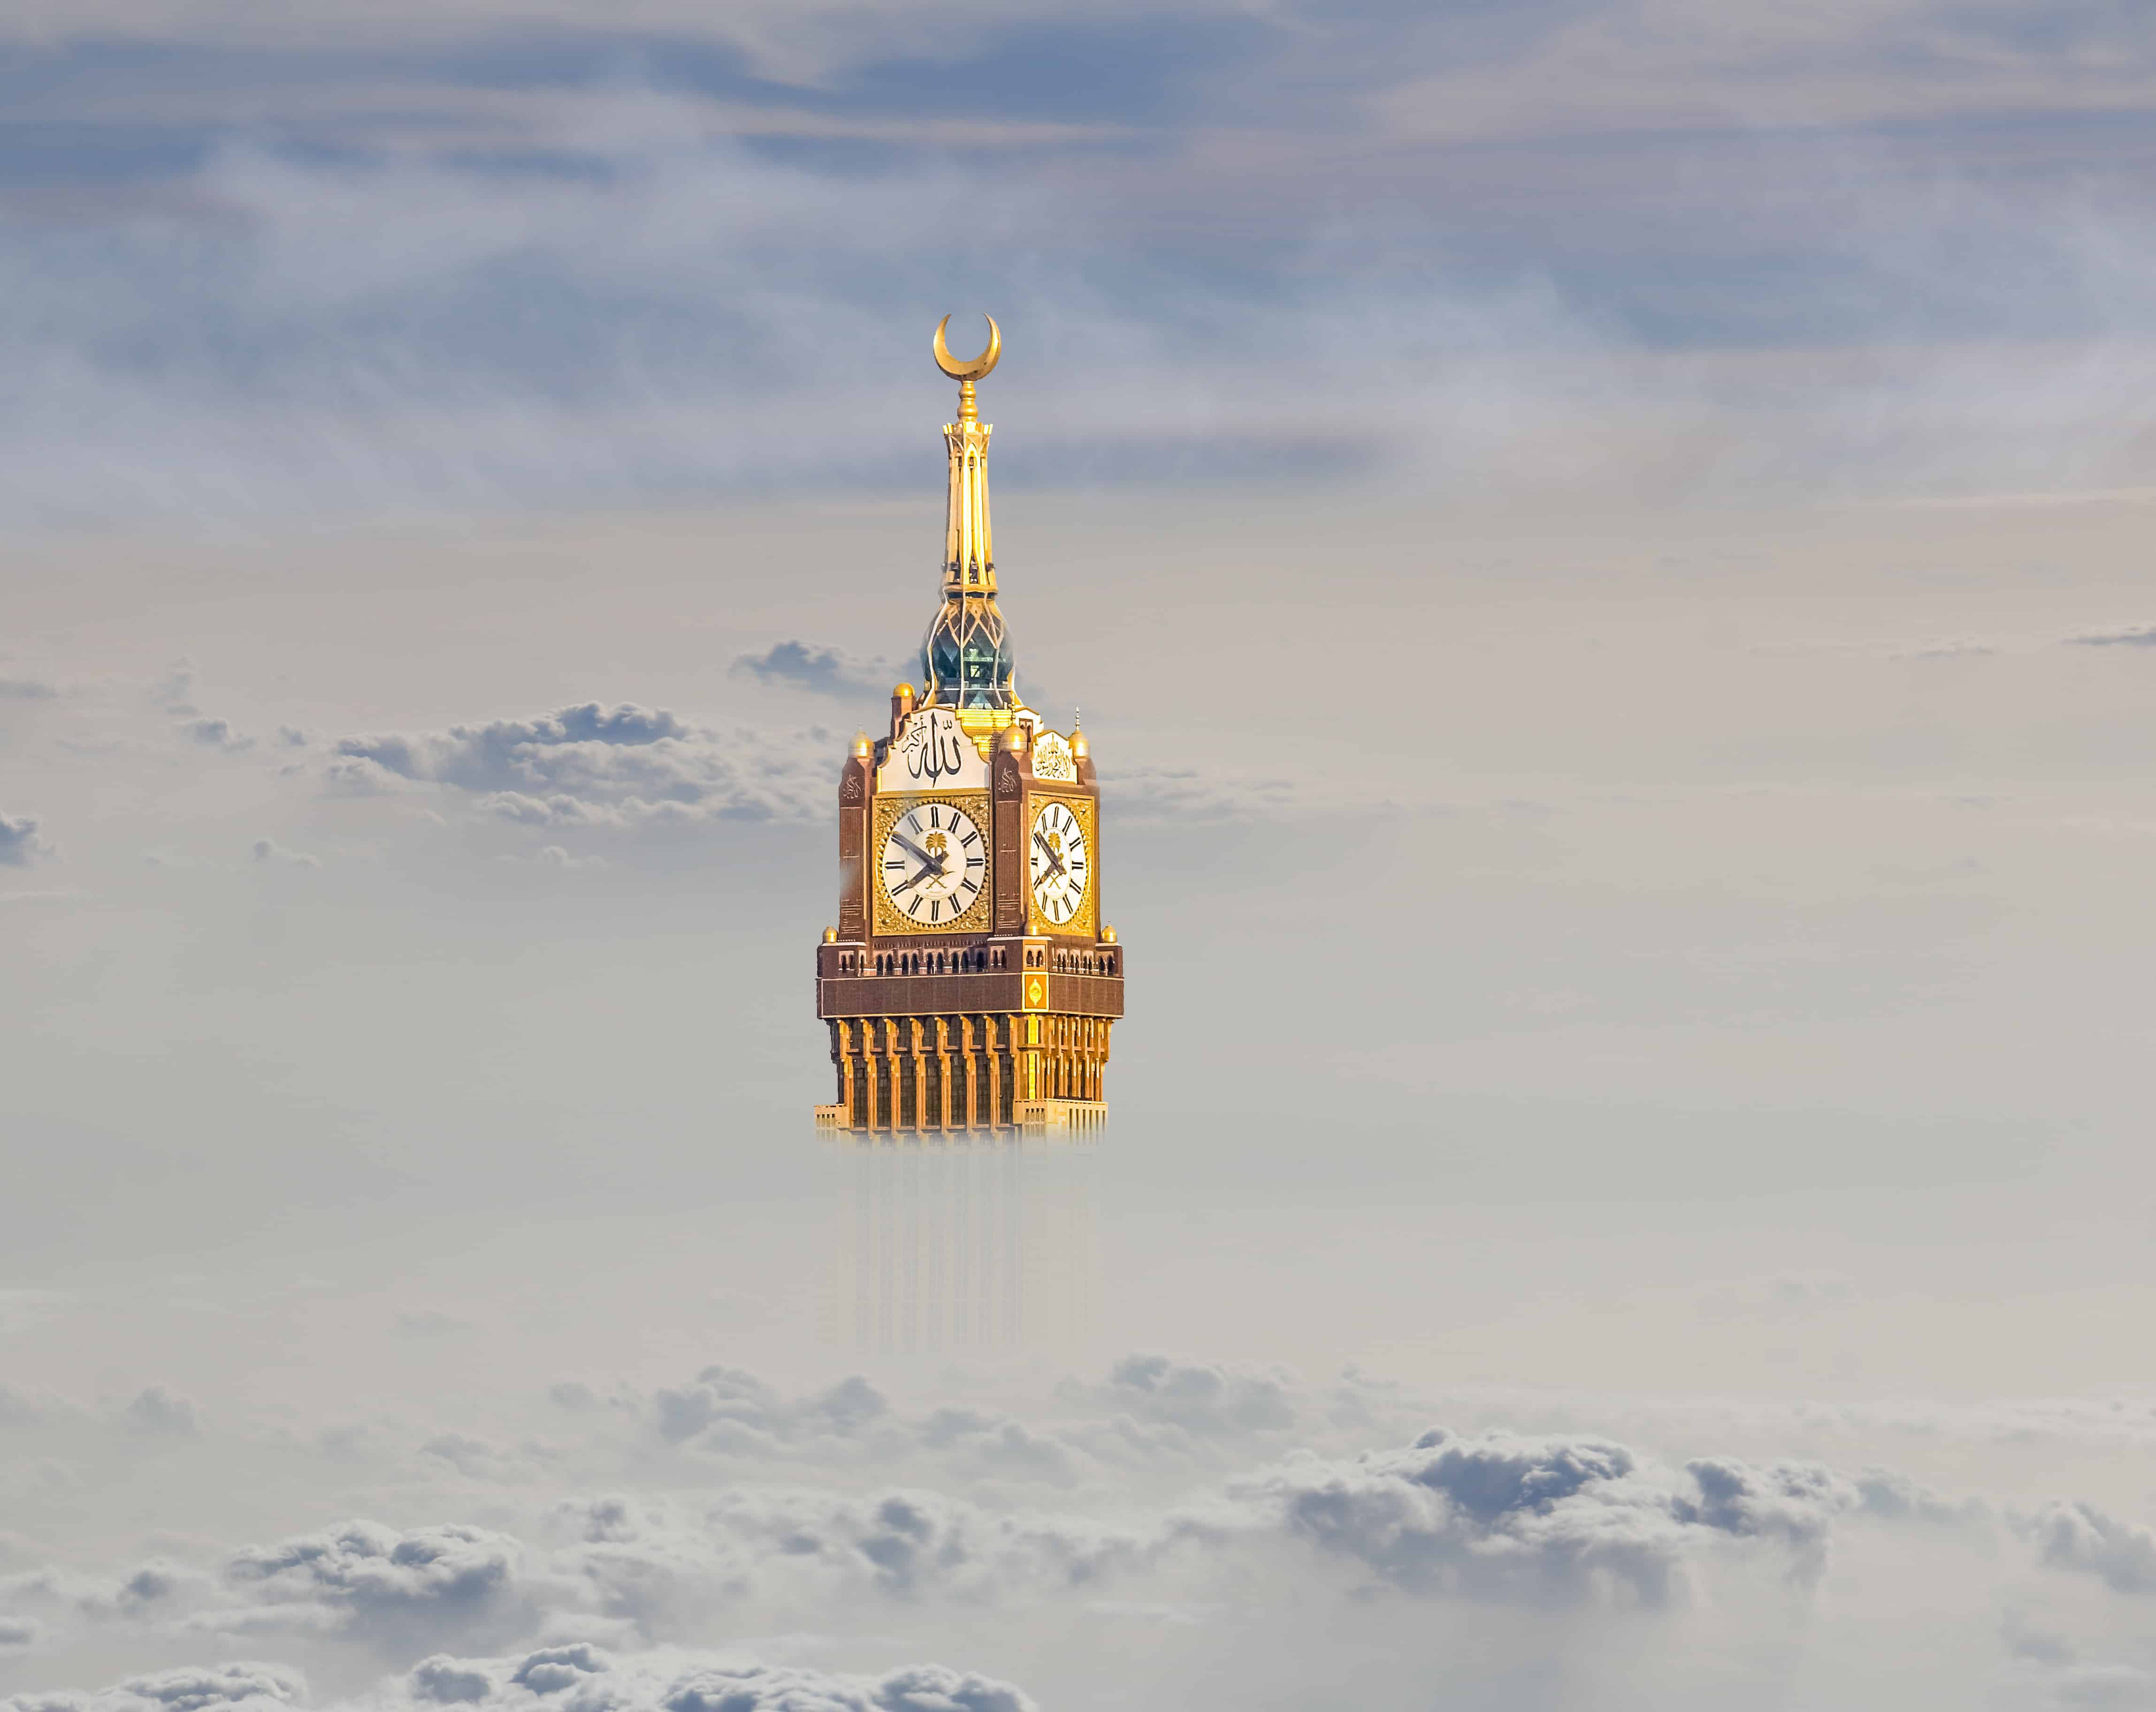 Abraj Al Bait Makkah Tower, (Royal Clock Tower Mecca)